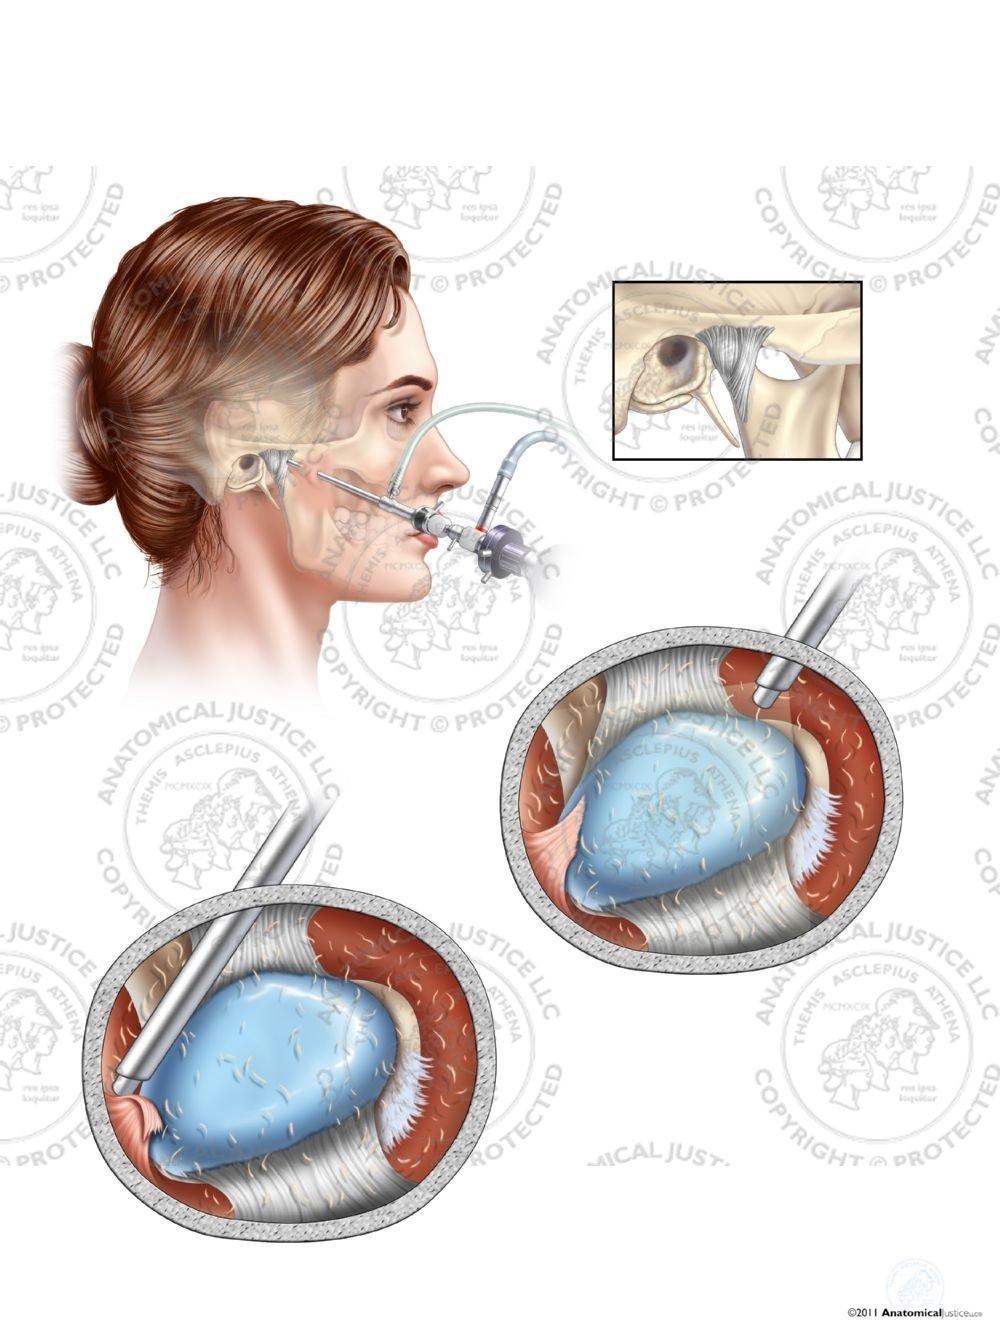 Female Arthroscopic Surgery of the Right Temporomandibular Joint (TMJ) – No Text